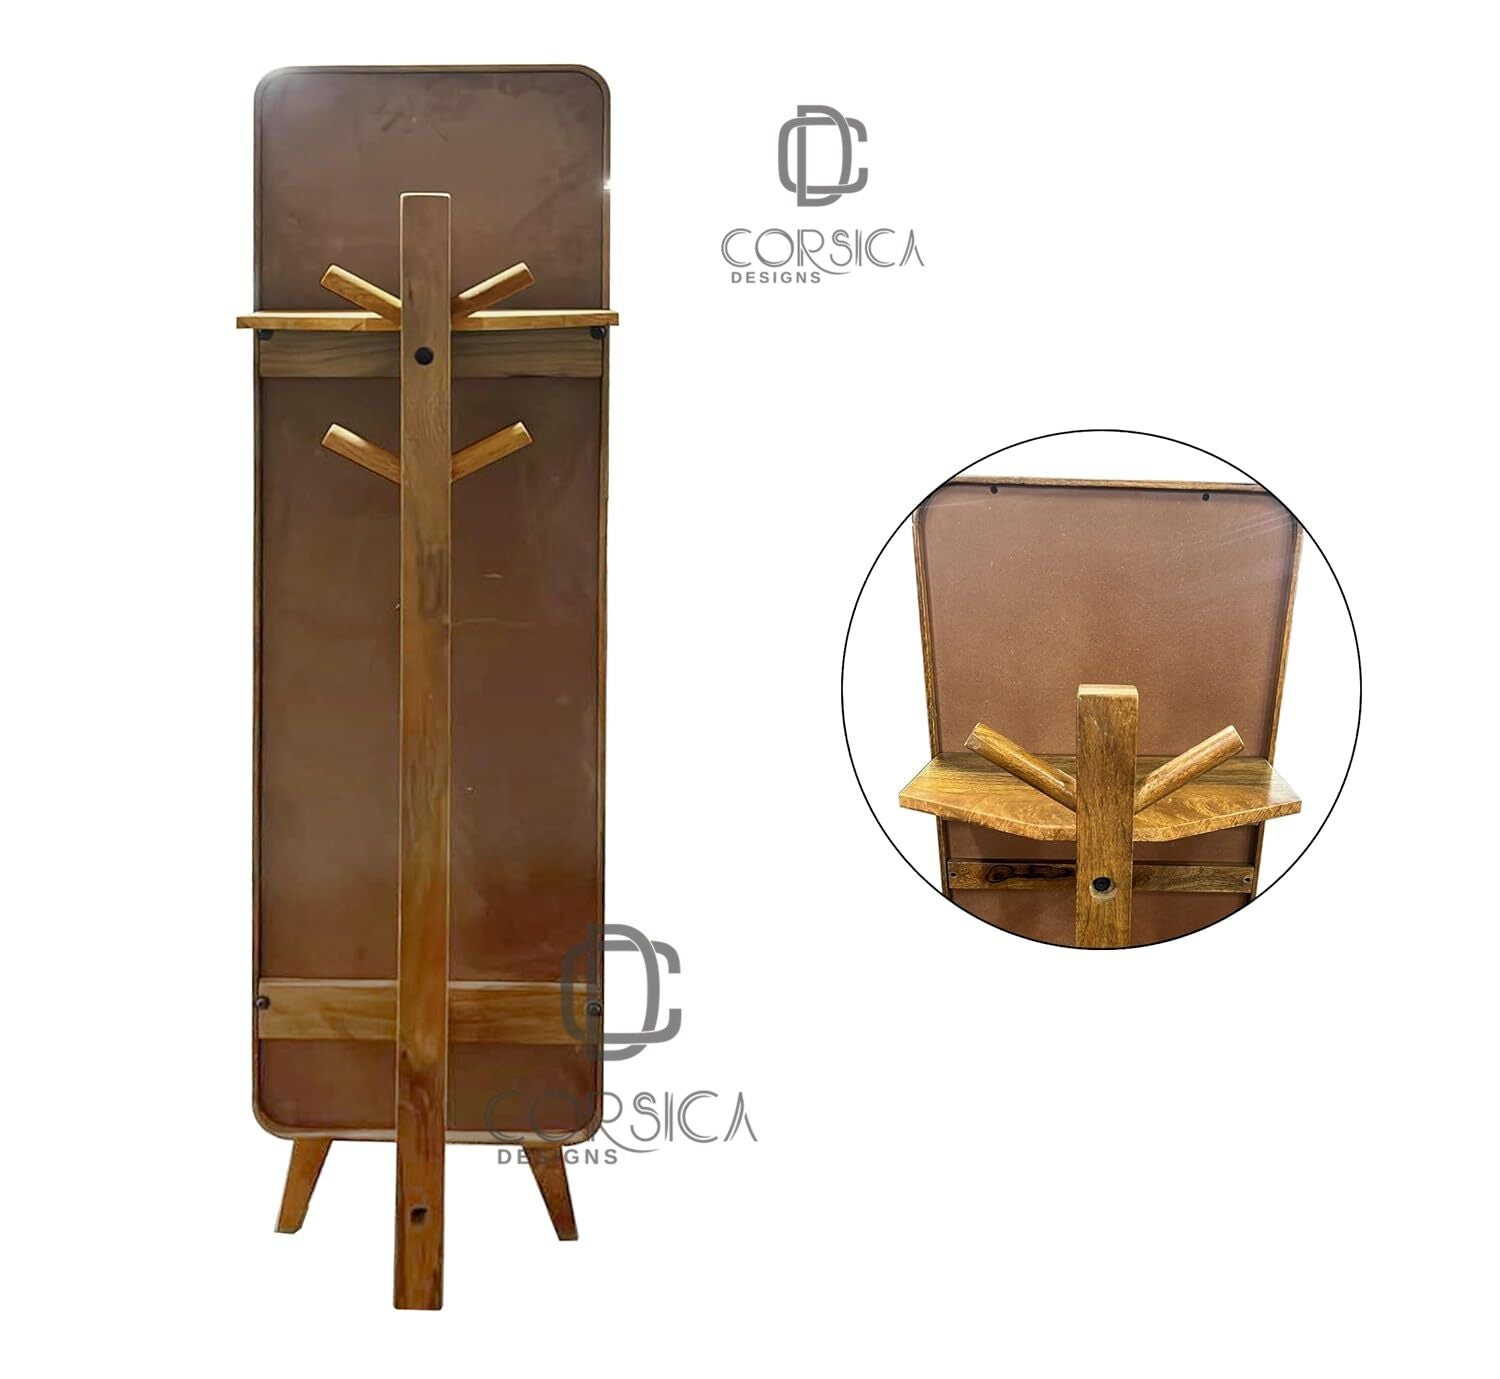 Ohana Wooden Coat-hanger Full-length Mirror with Stand